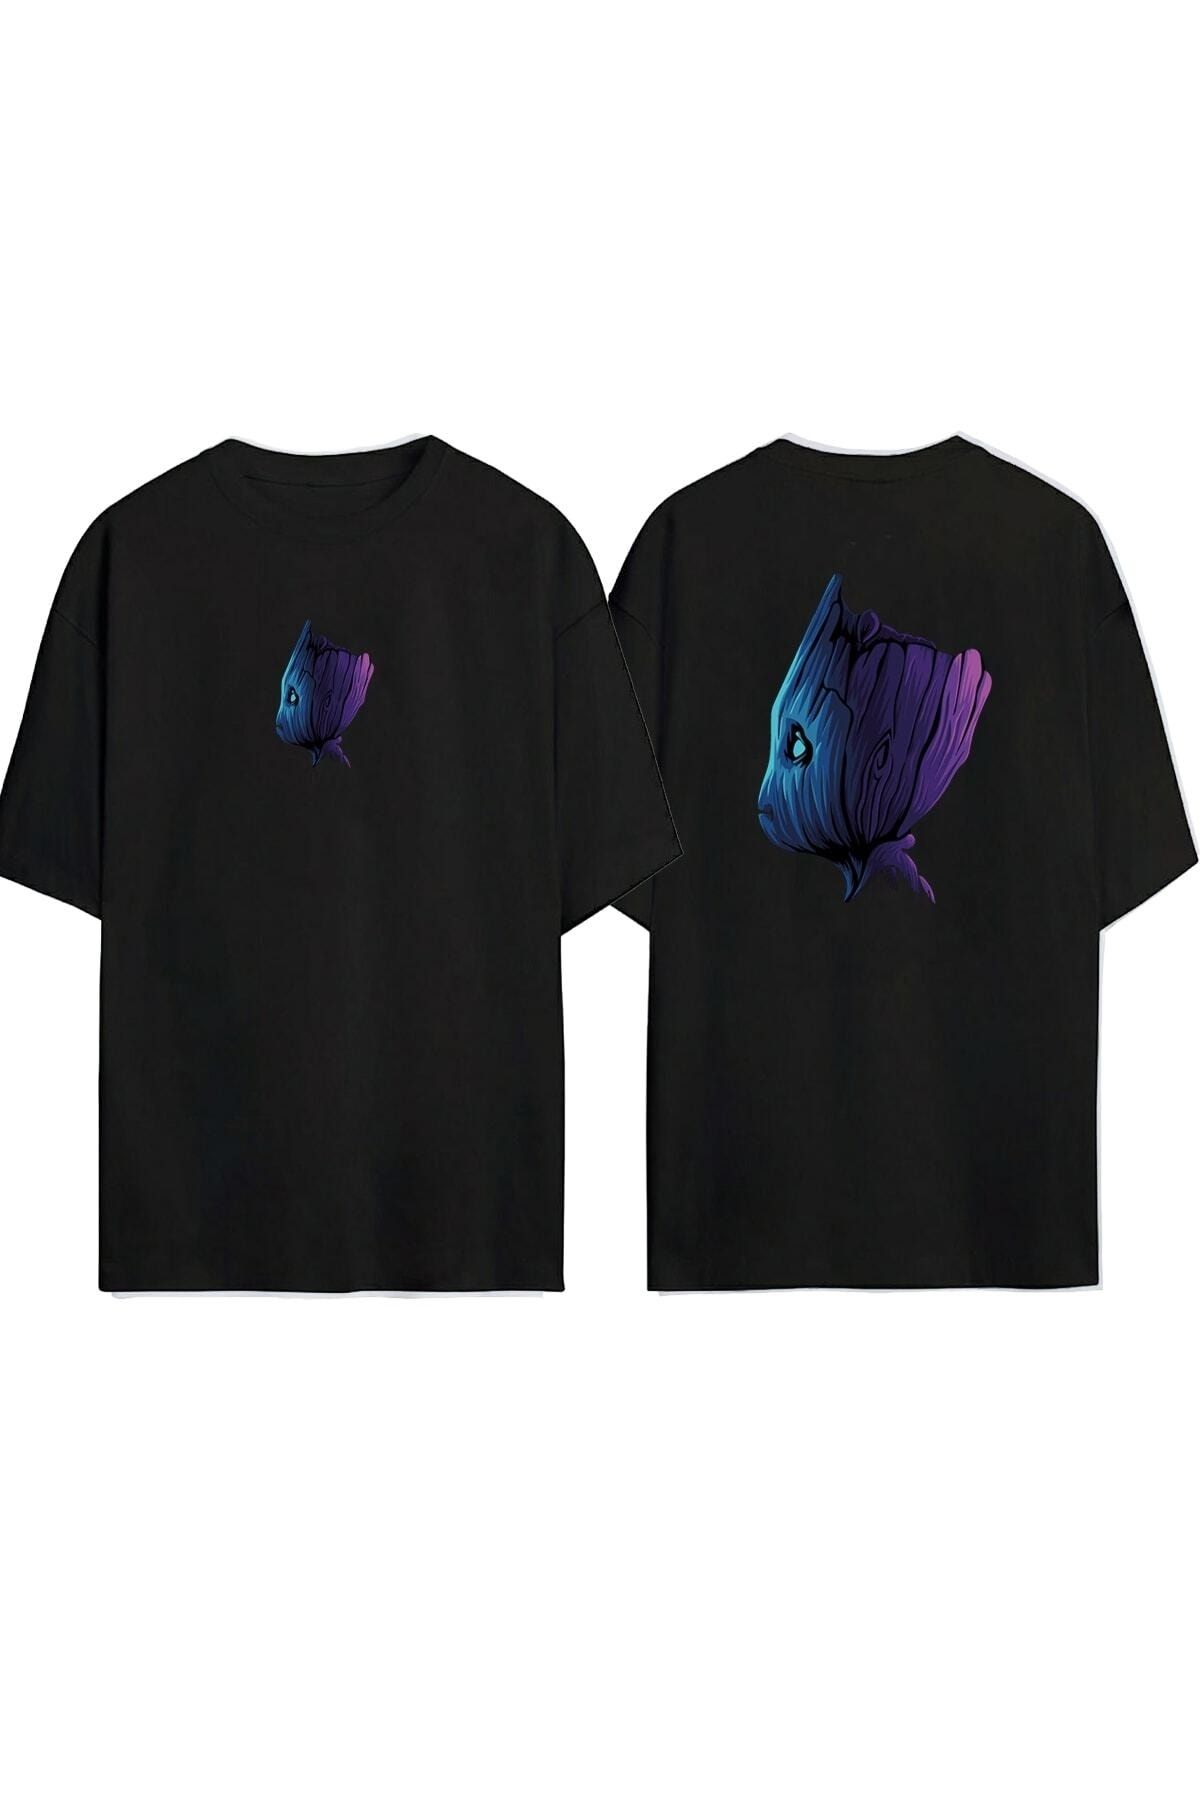 THEWERT Unisex Siyah Groot Baskılı Oversize T-shirt